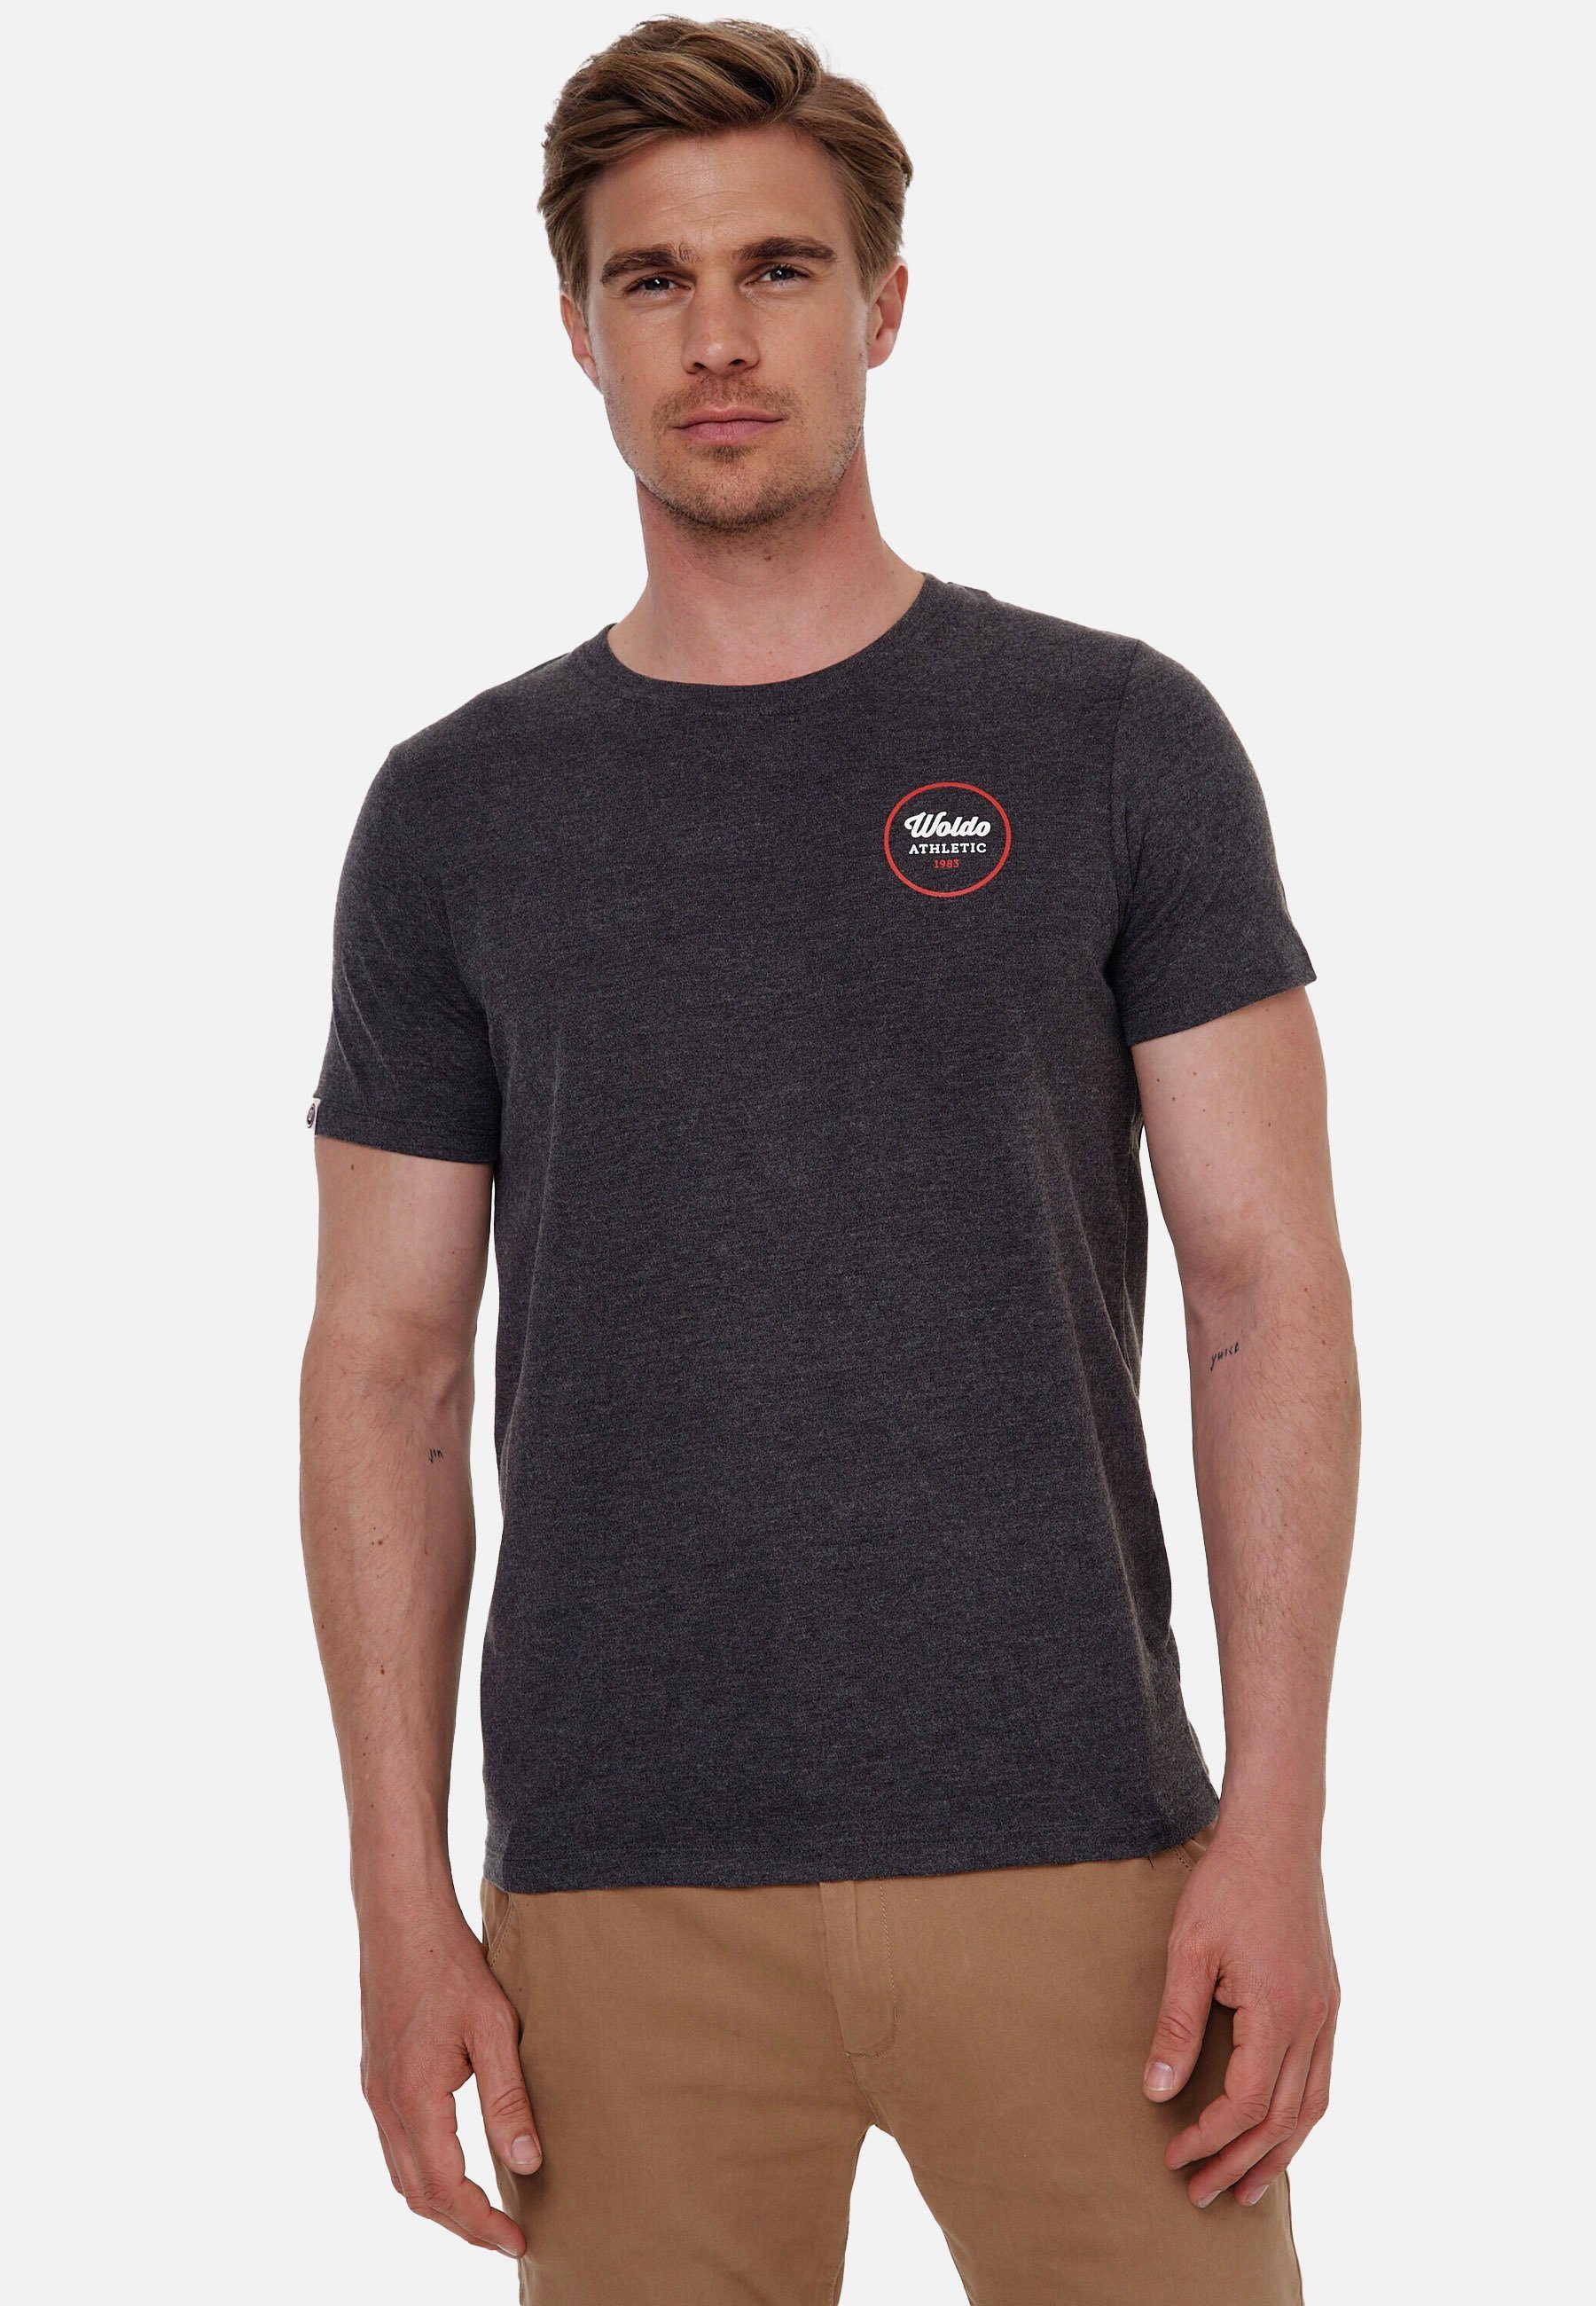 Woldo Athletic T-Shirt T-Shirt Runder Print dunkelgrau-weiß